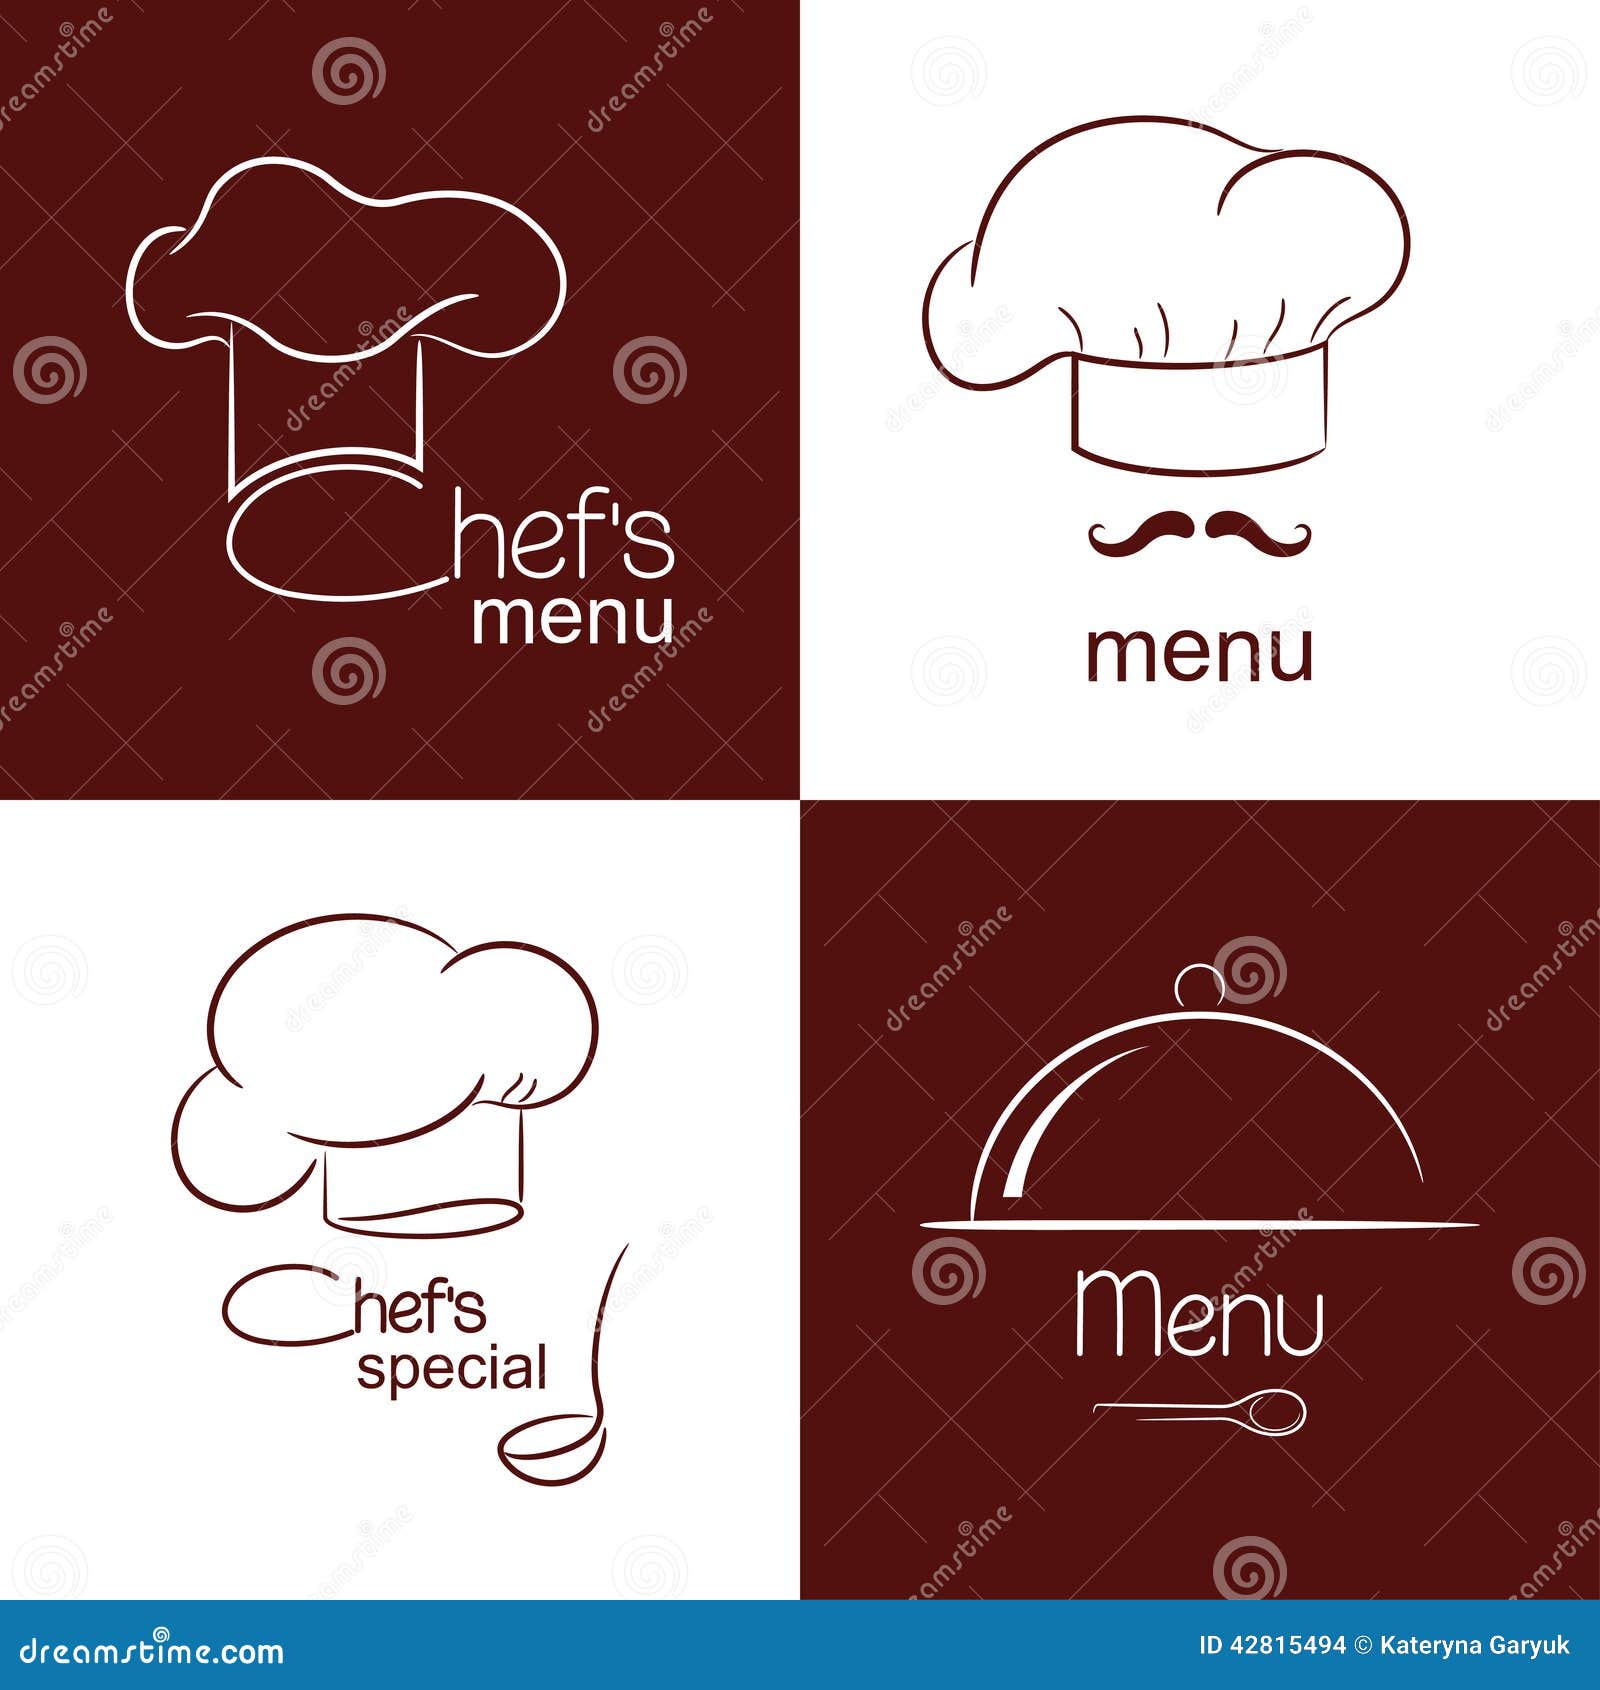 Restaurant menu icons stock vector. Illustration of ladle - 42815494